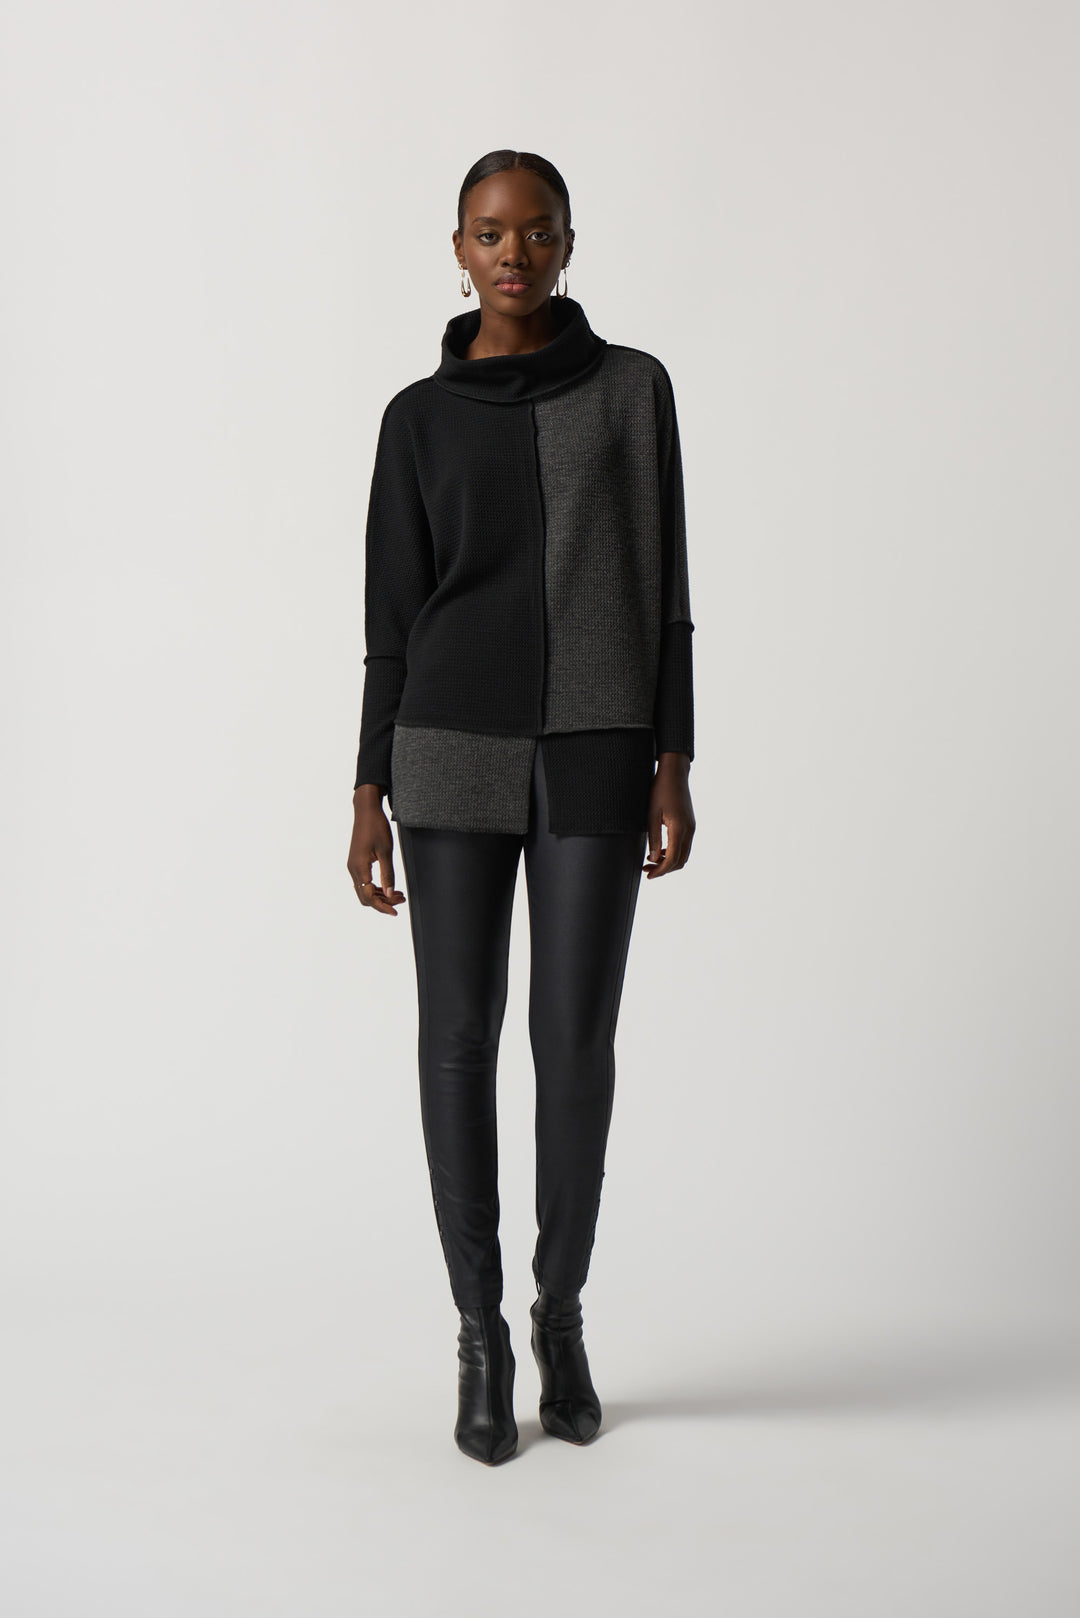 Joseph Ribkoff Fall 2023 women's casual light waffle knit tunic black and grey sweater top - model